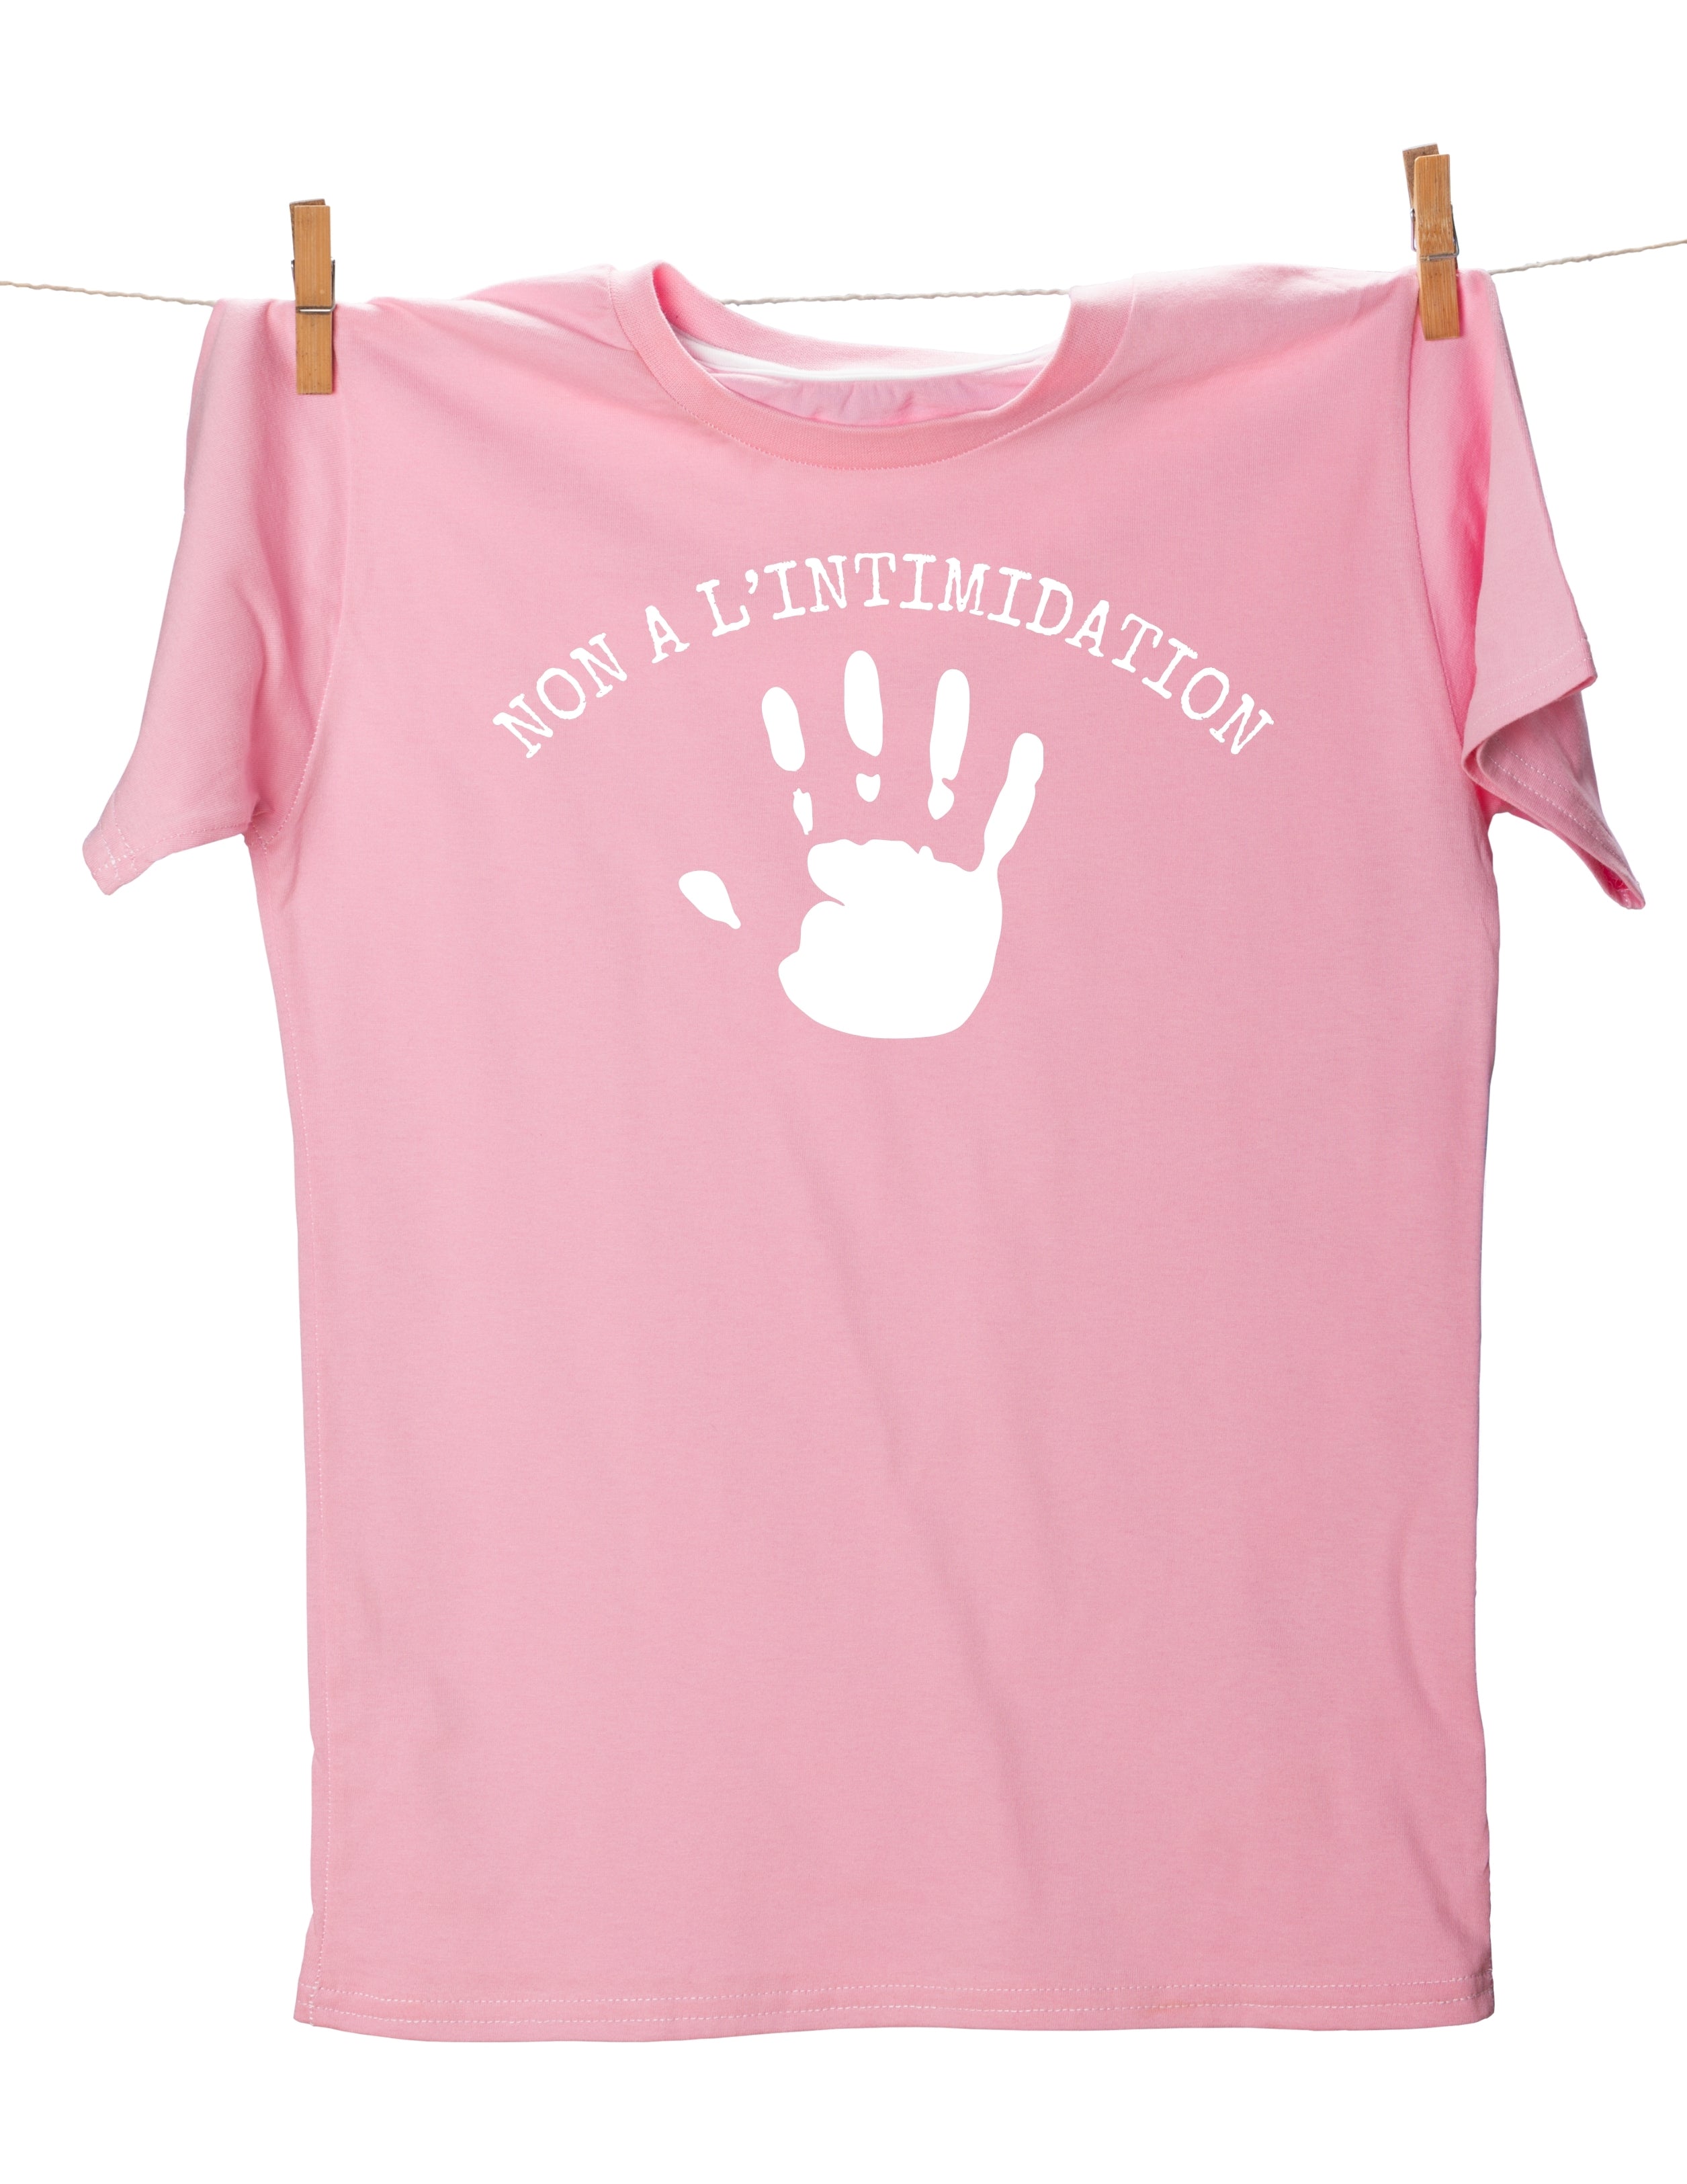 Adult Pink T-Shirt